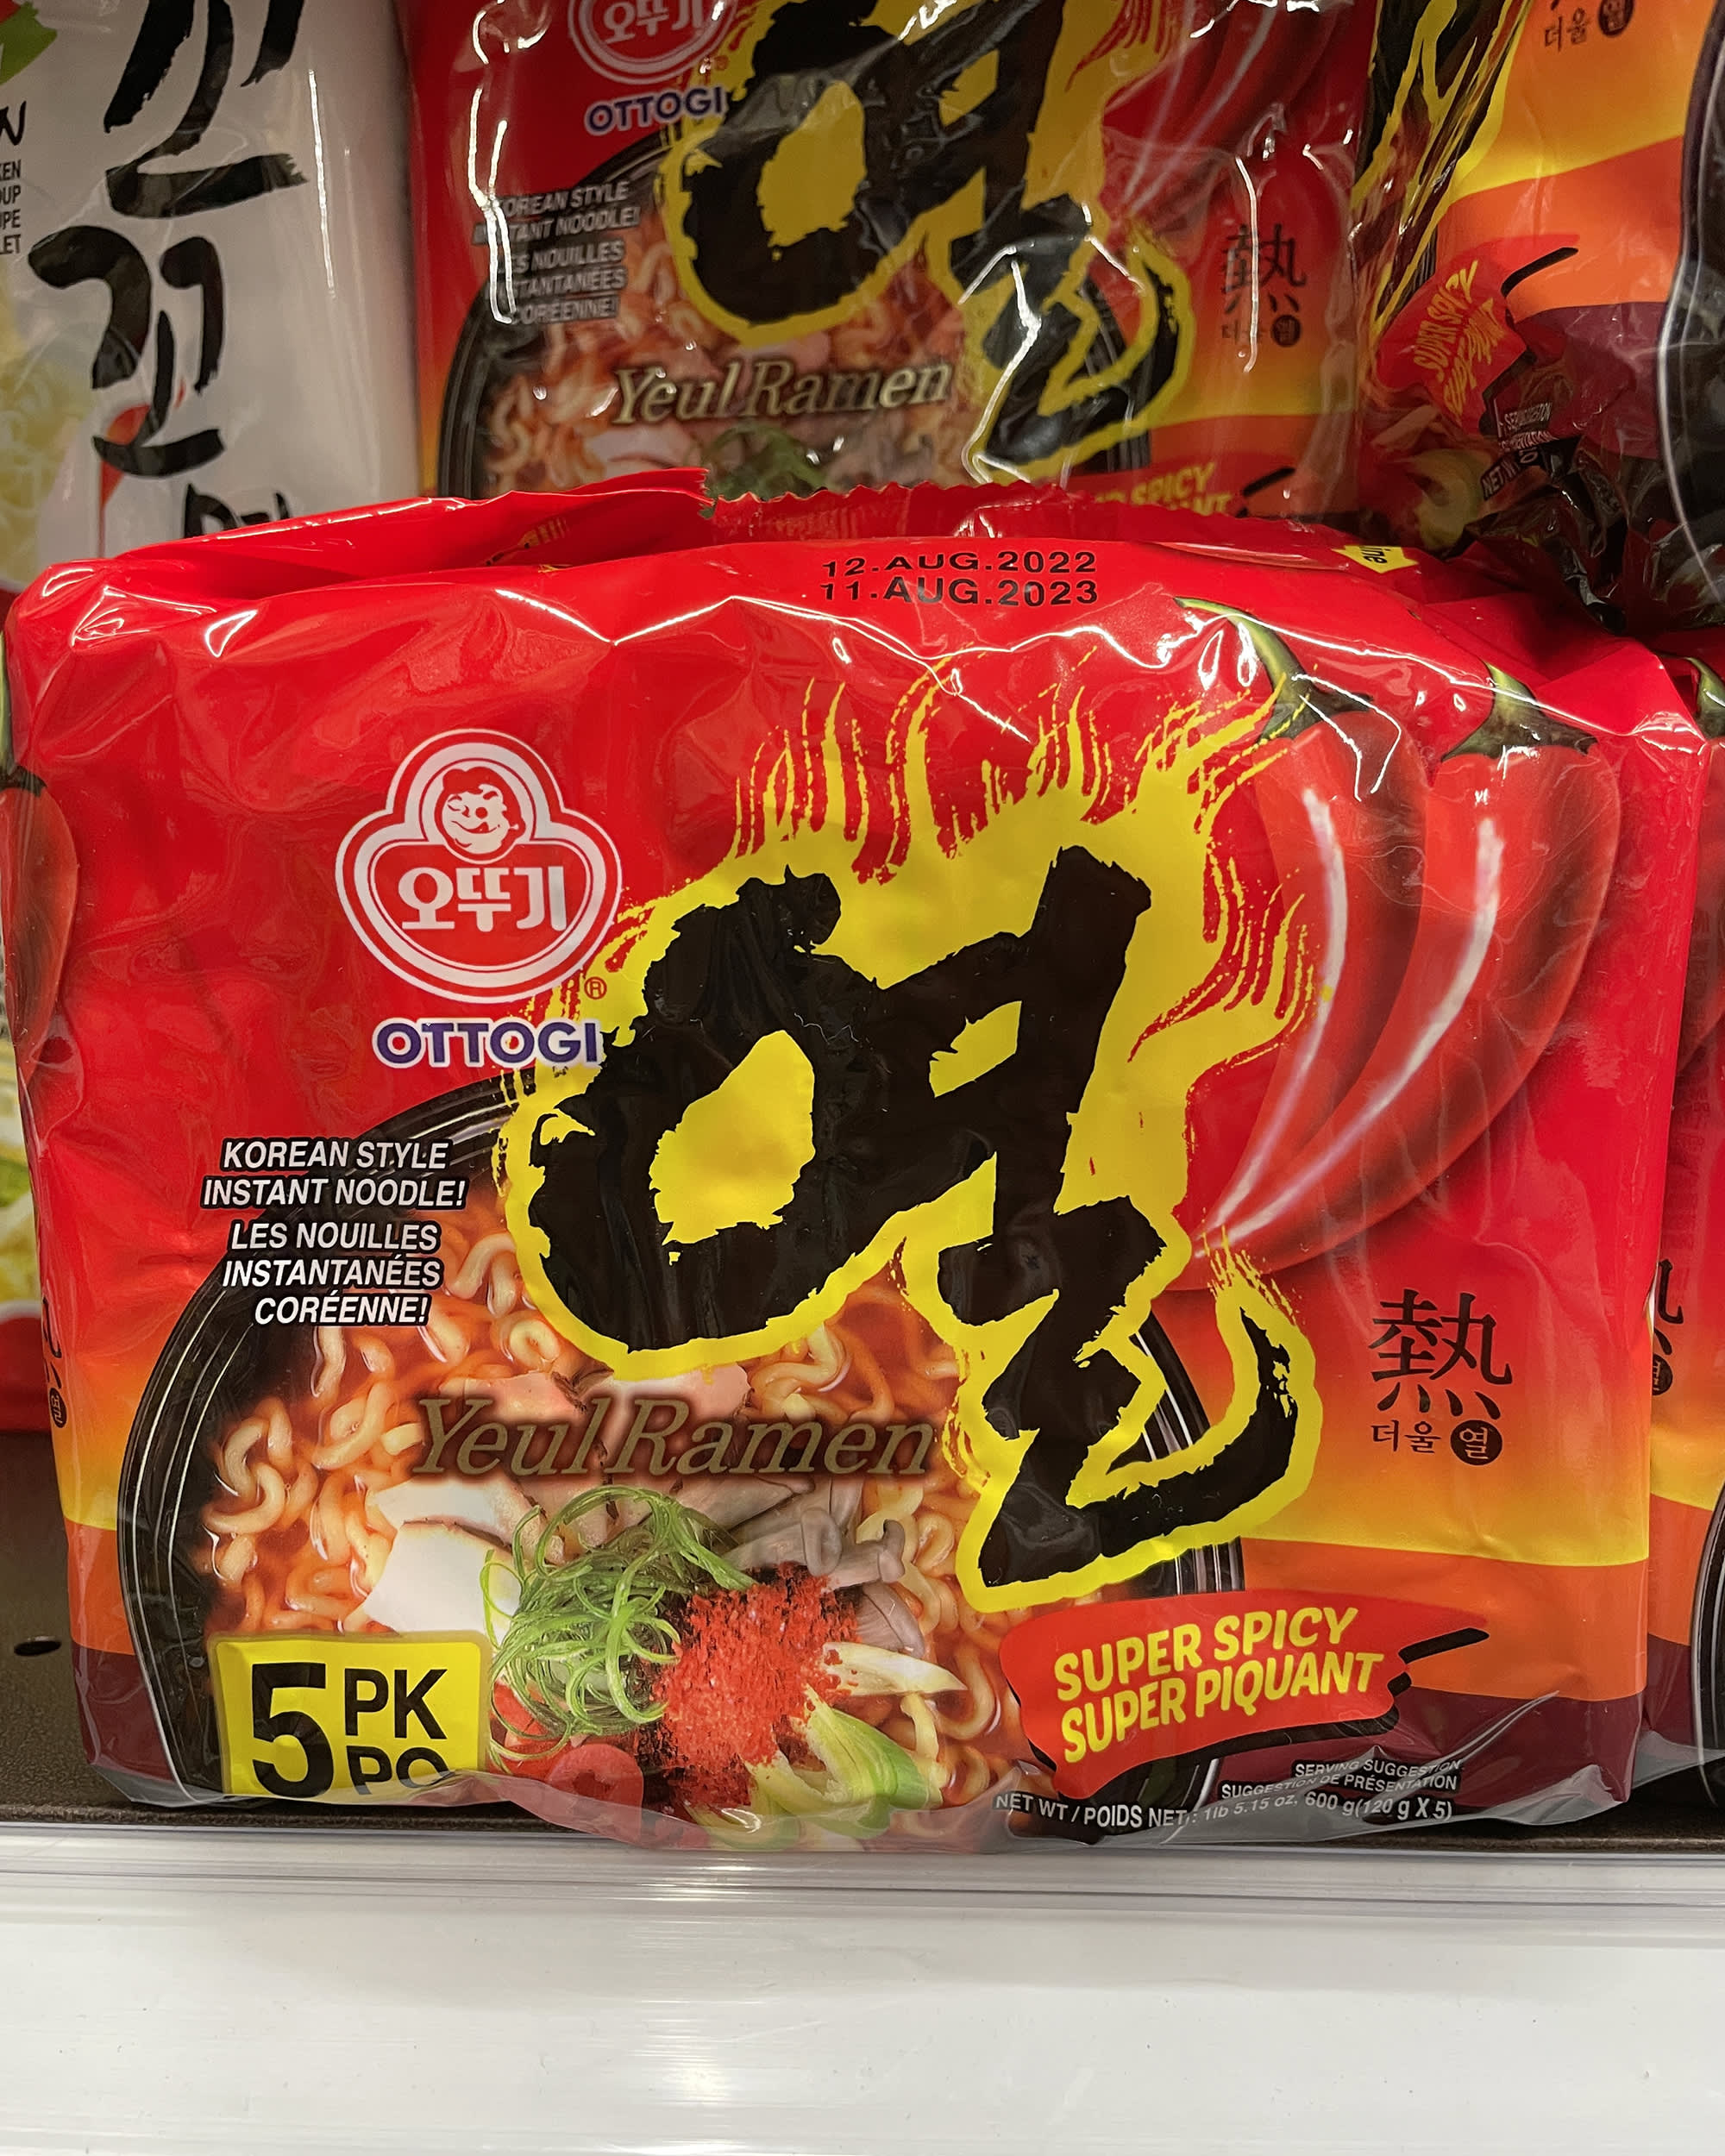 Ottogi Spicy Jin Ramen Korean Style Instant Noodles 4 Pack